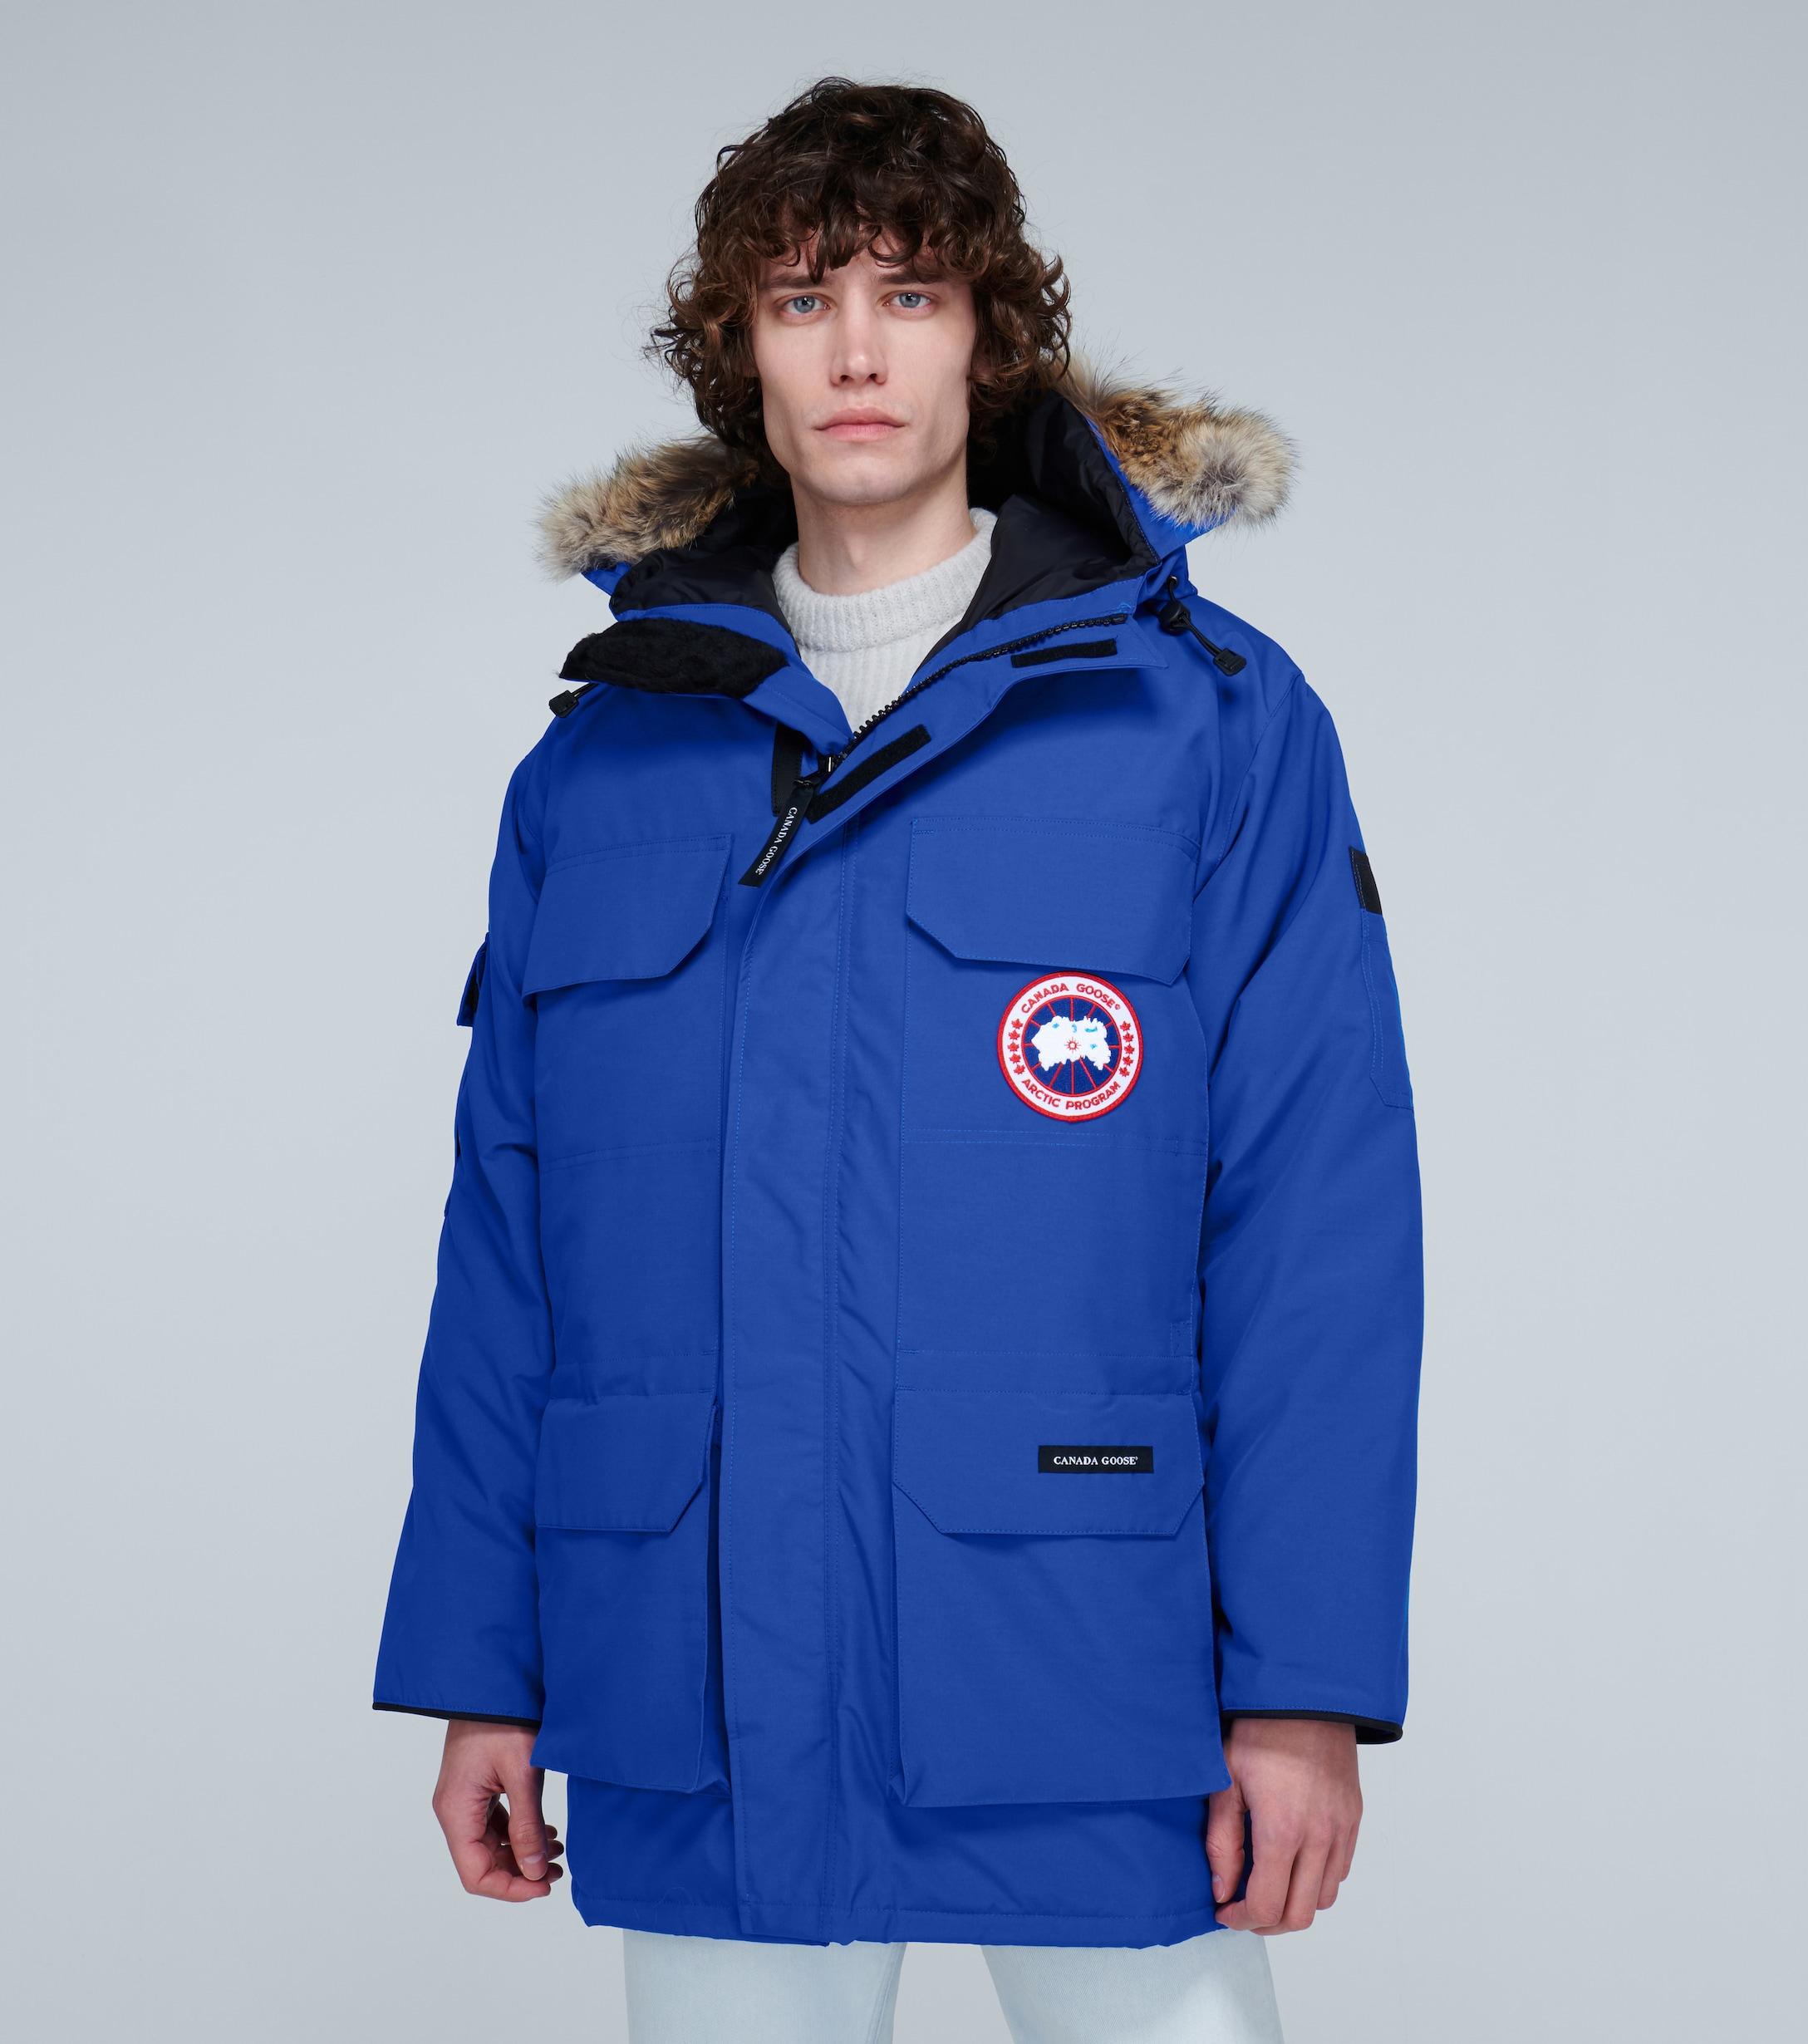 Canada Goose Goose Expedition Parka Jacket Pbi in Blue for Men - Save 40% |  Lyst